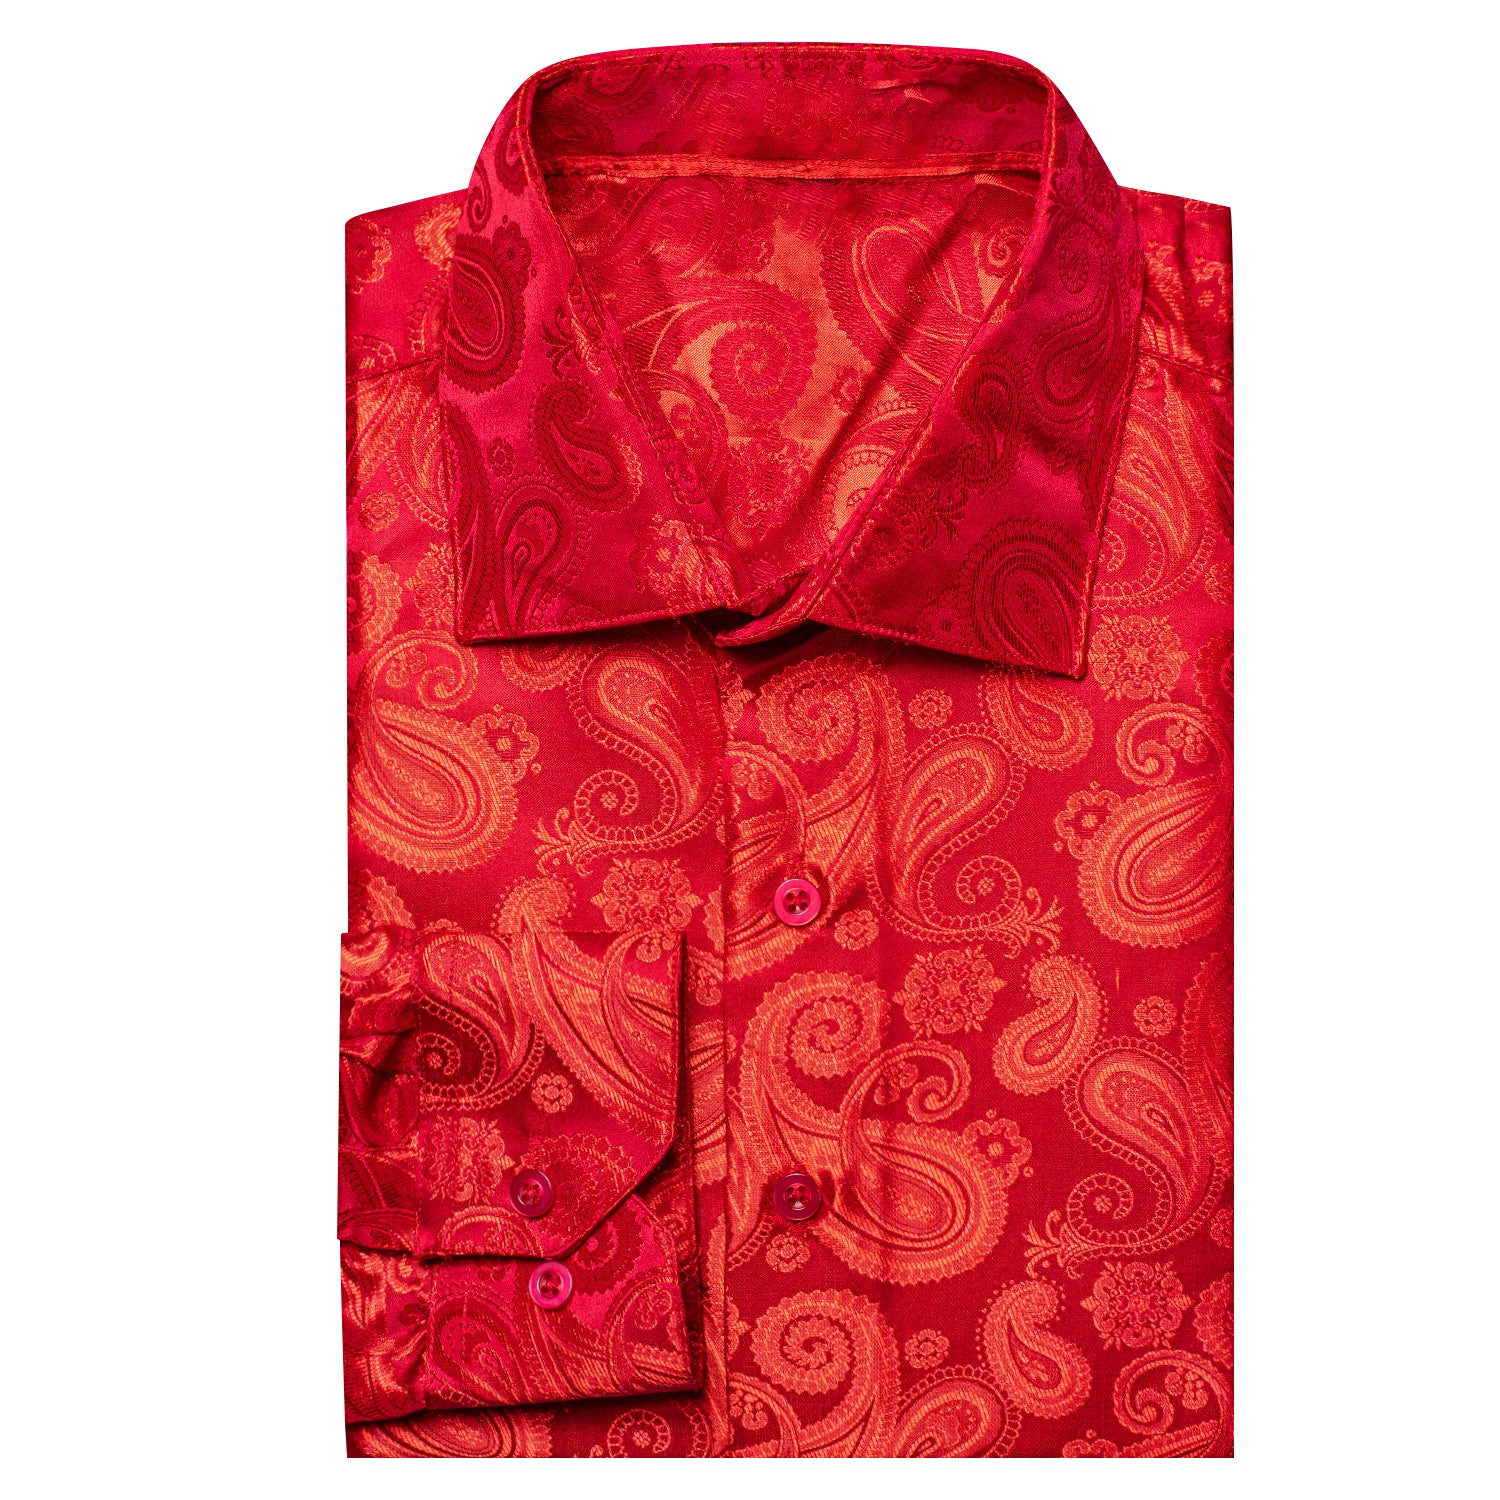 Fresh Red Paisley Silk Men's Long Sleeve Shirt Casual